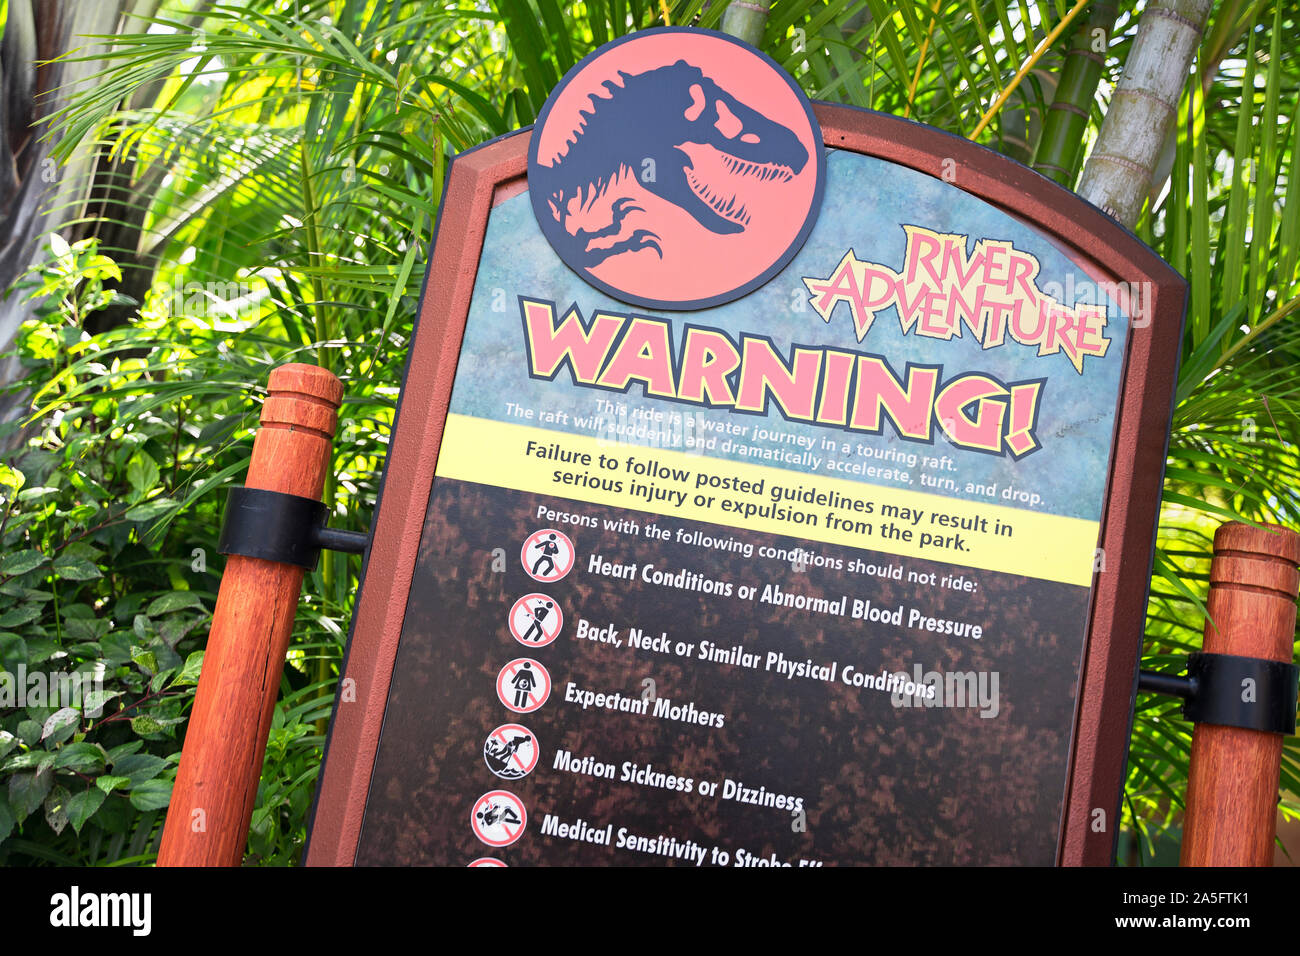 River Adventure, Jurassic Ride Warning Sign, Health Conditions Guidelines Sign, Islands of Adventure, Universal Studios Resort, Orlando, Florida, USA Stock Photo